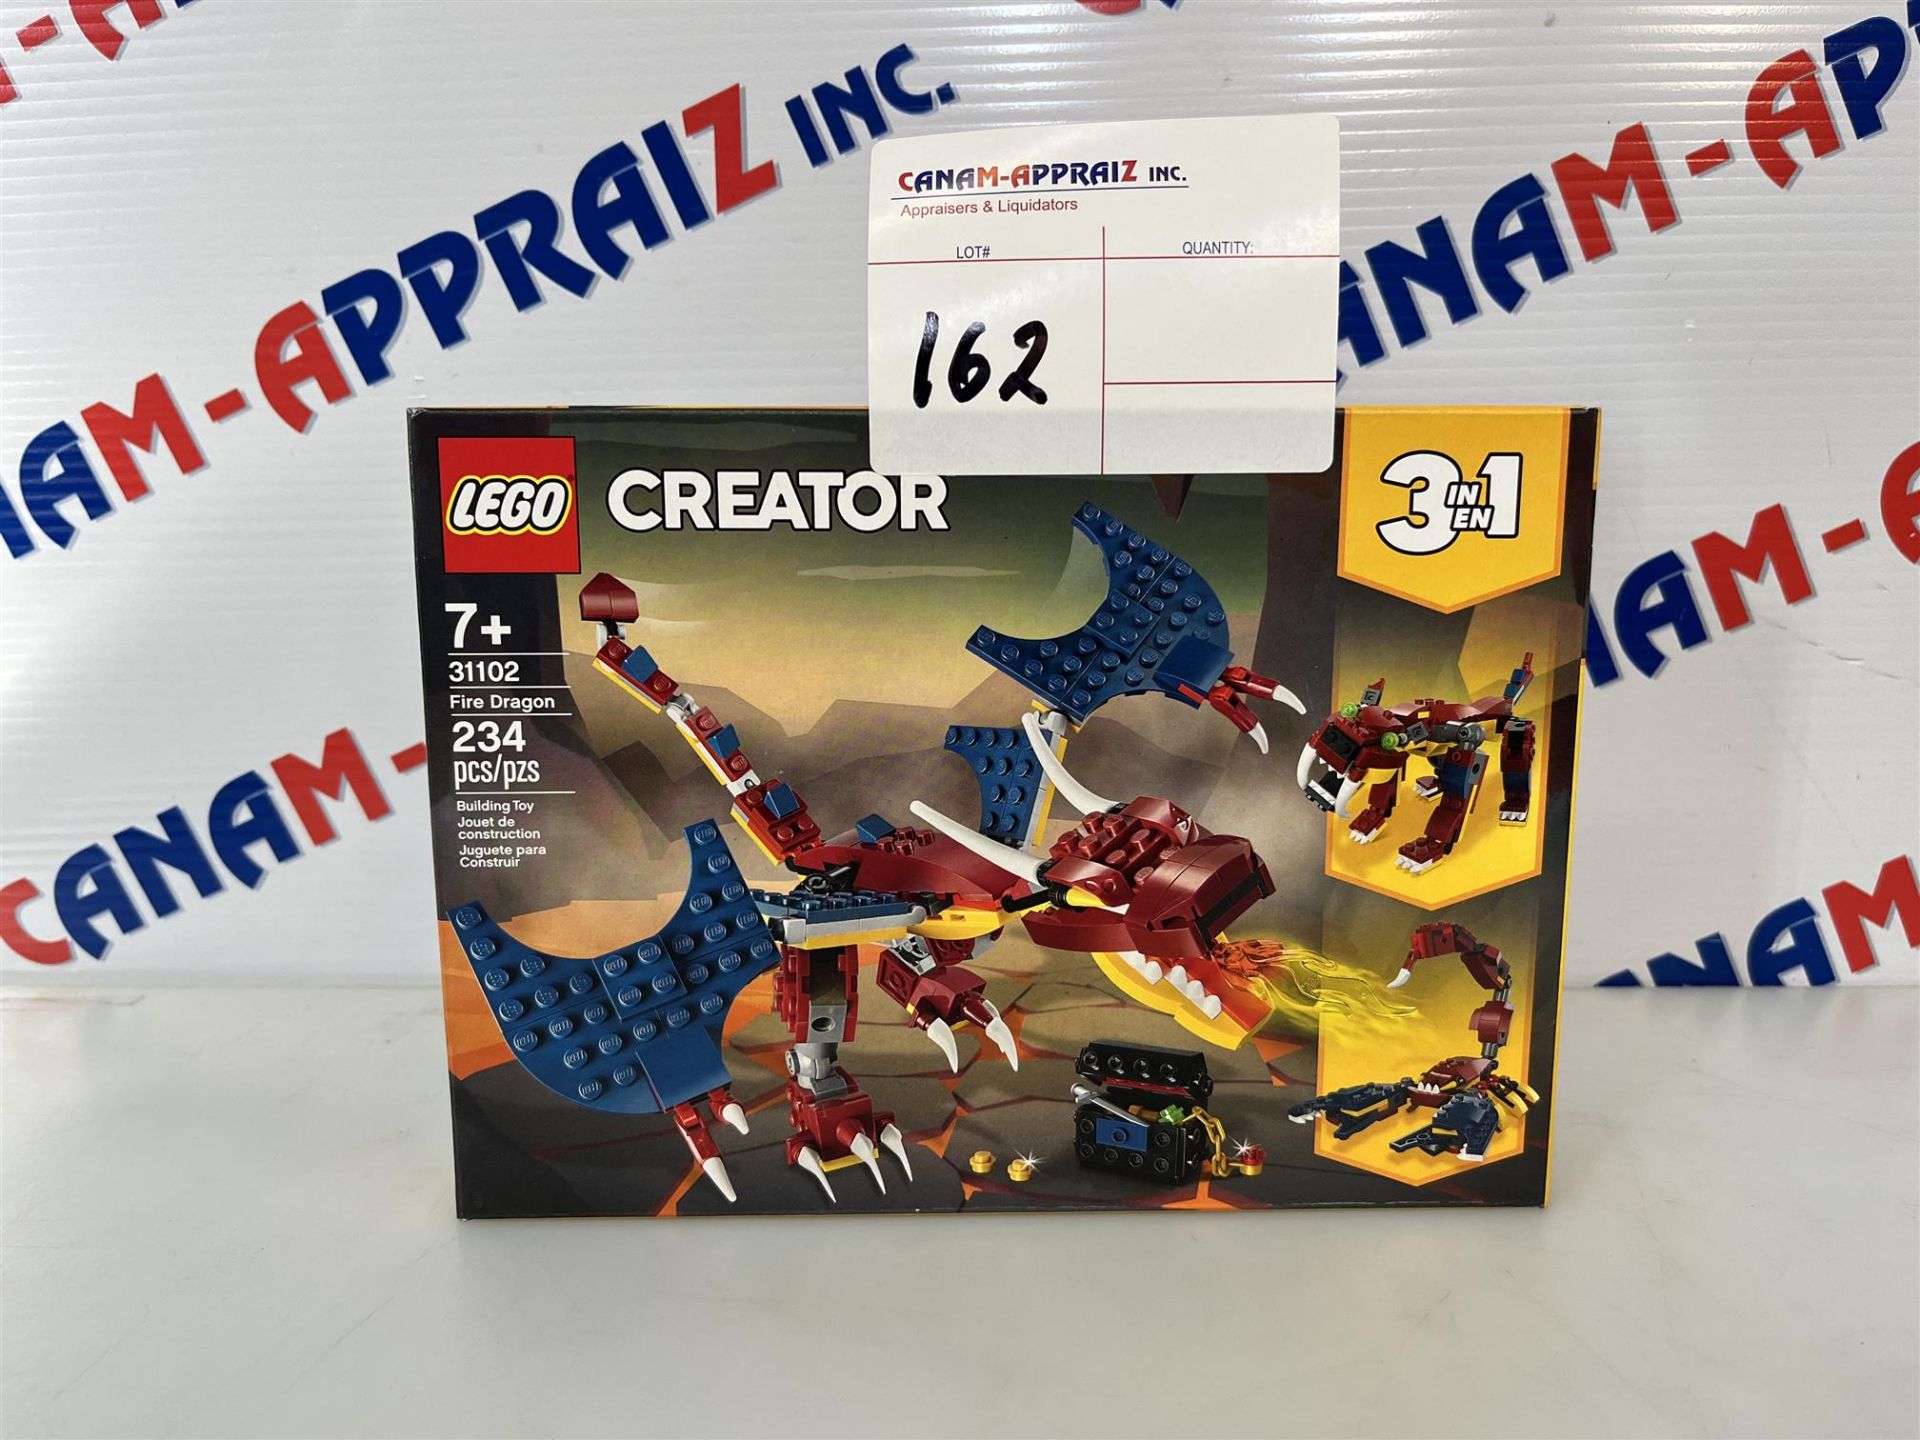 Lego Creator Fire Dragon 31102 - Ages 7+ - 234 PCS